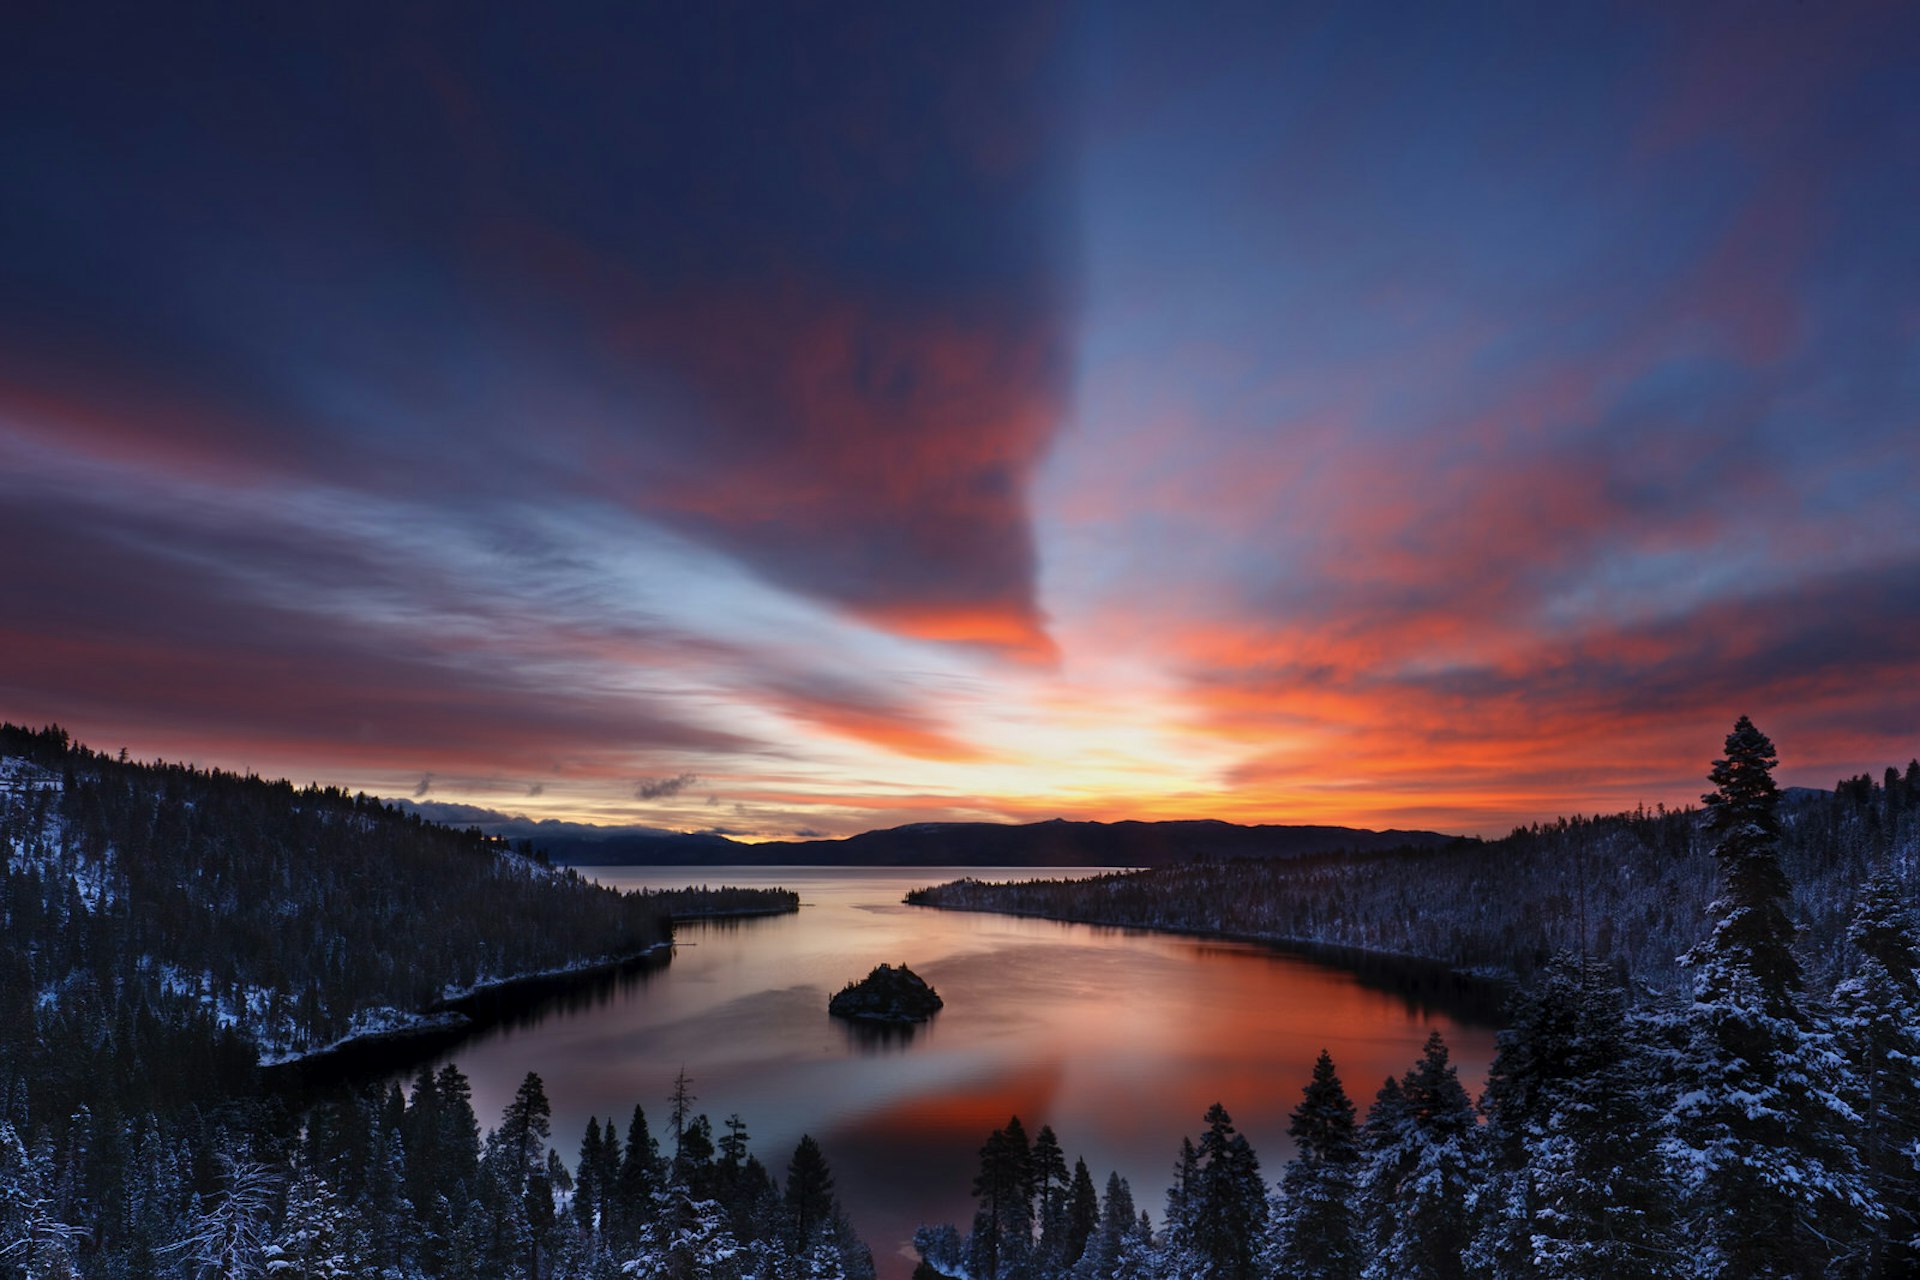 Dawn breaks over Emerald Bay, Lake Tahoe